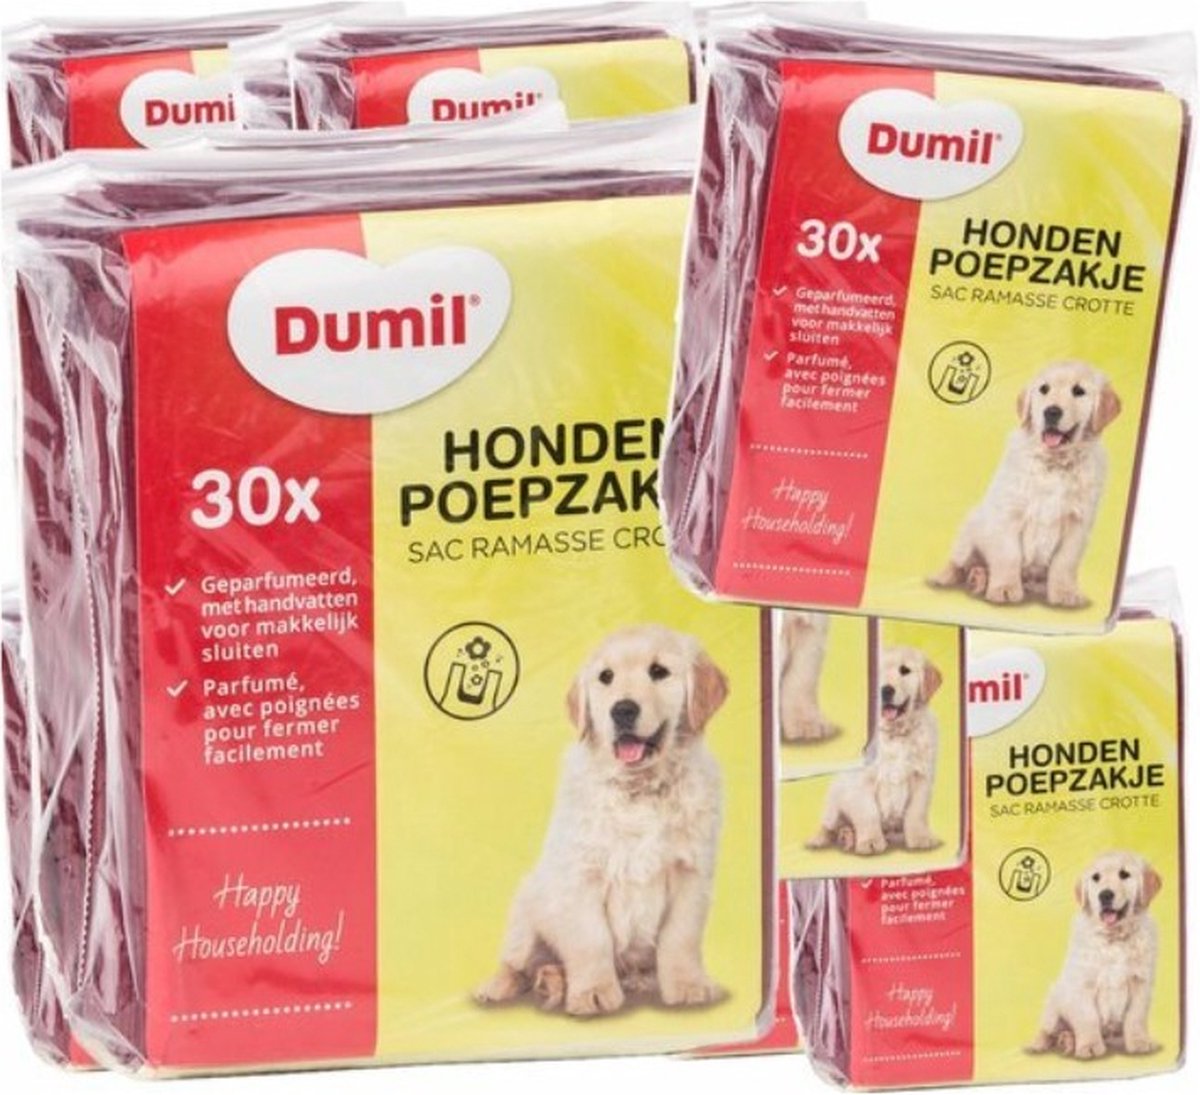 kandidaat gewoontjes Smaak Dumil poepzakjes - hondenpoepzakjes - 24 x 30 stuks - 720 poepzakjes |  bol.com